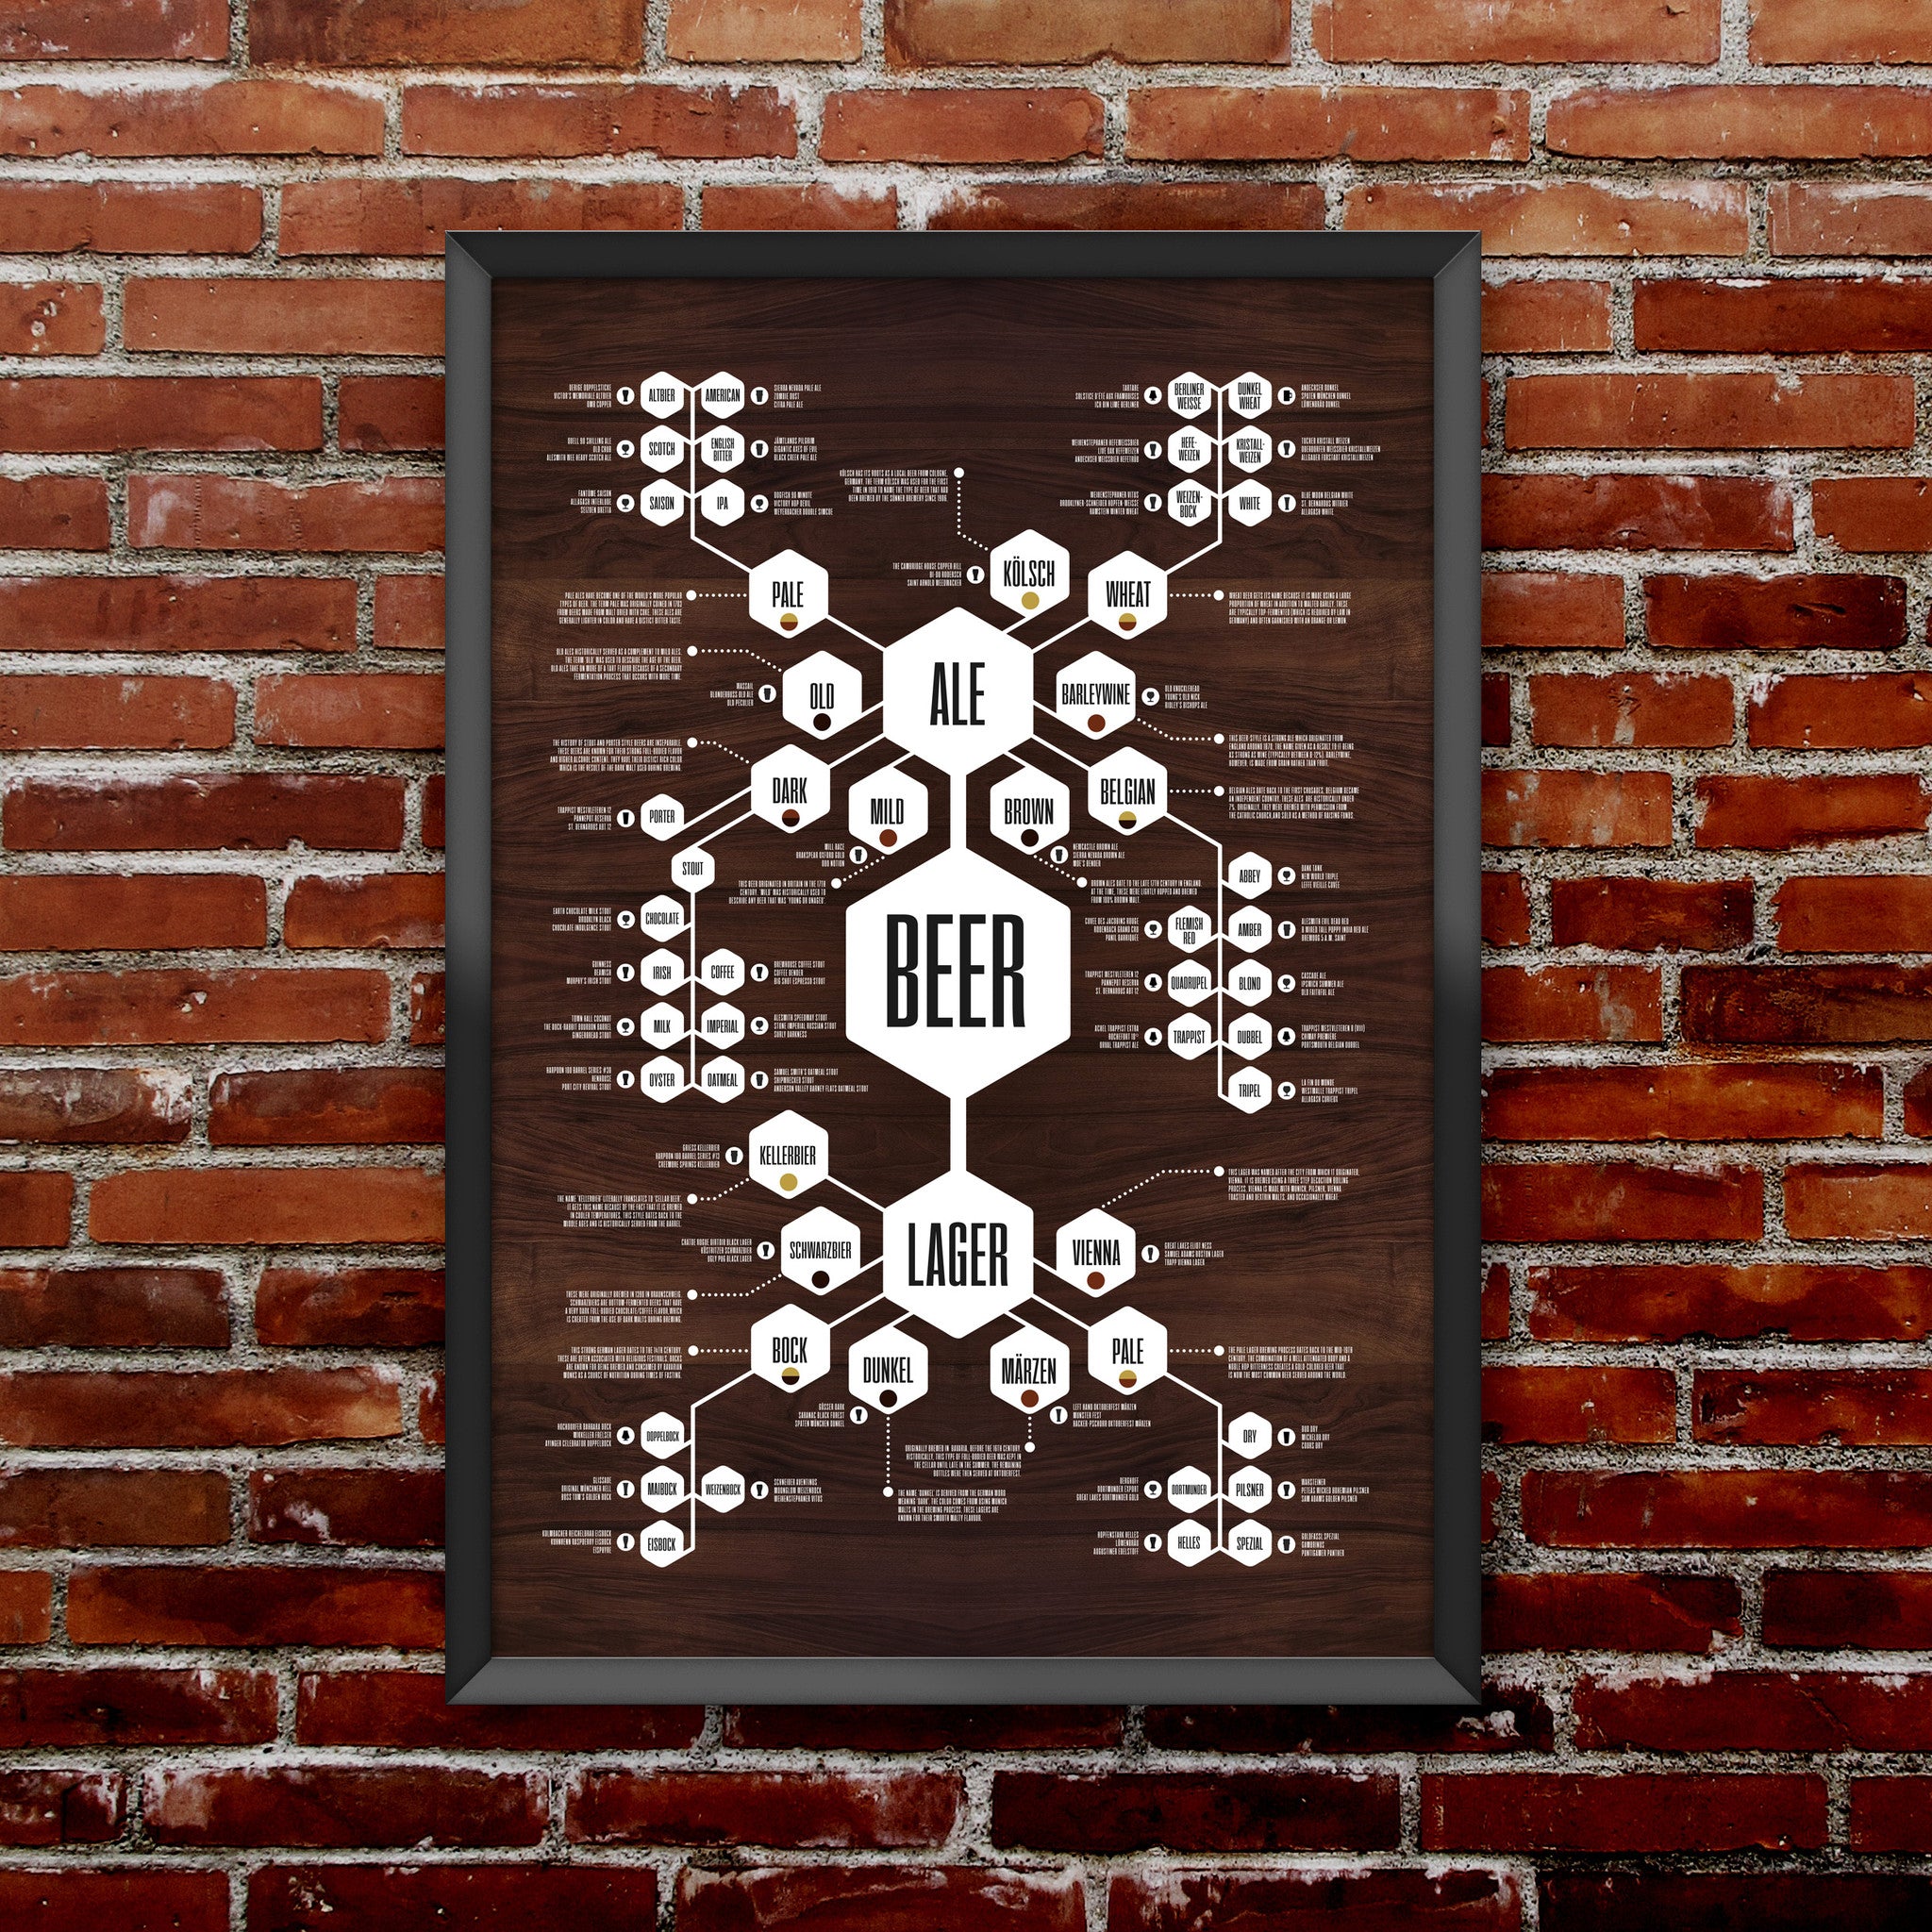 Beer Diagram Print